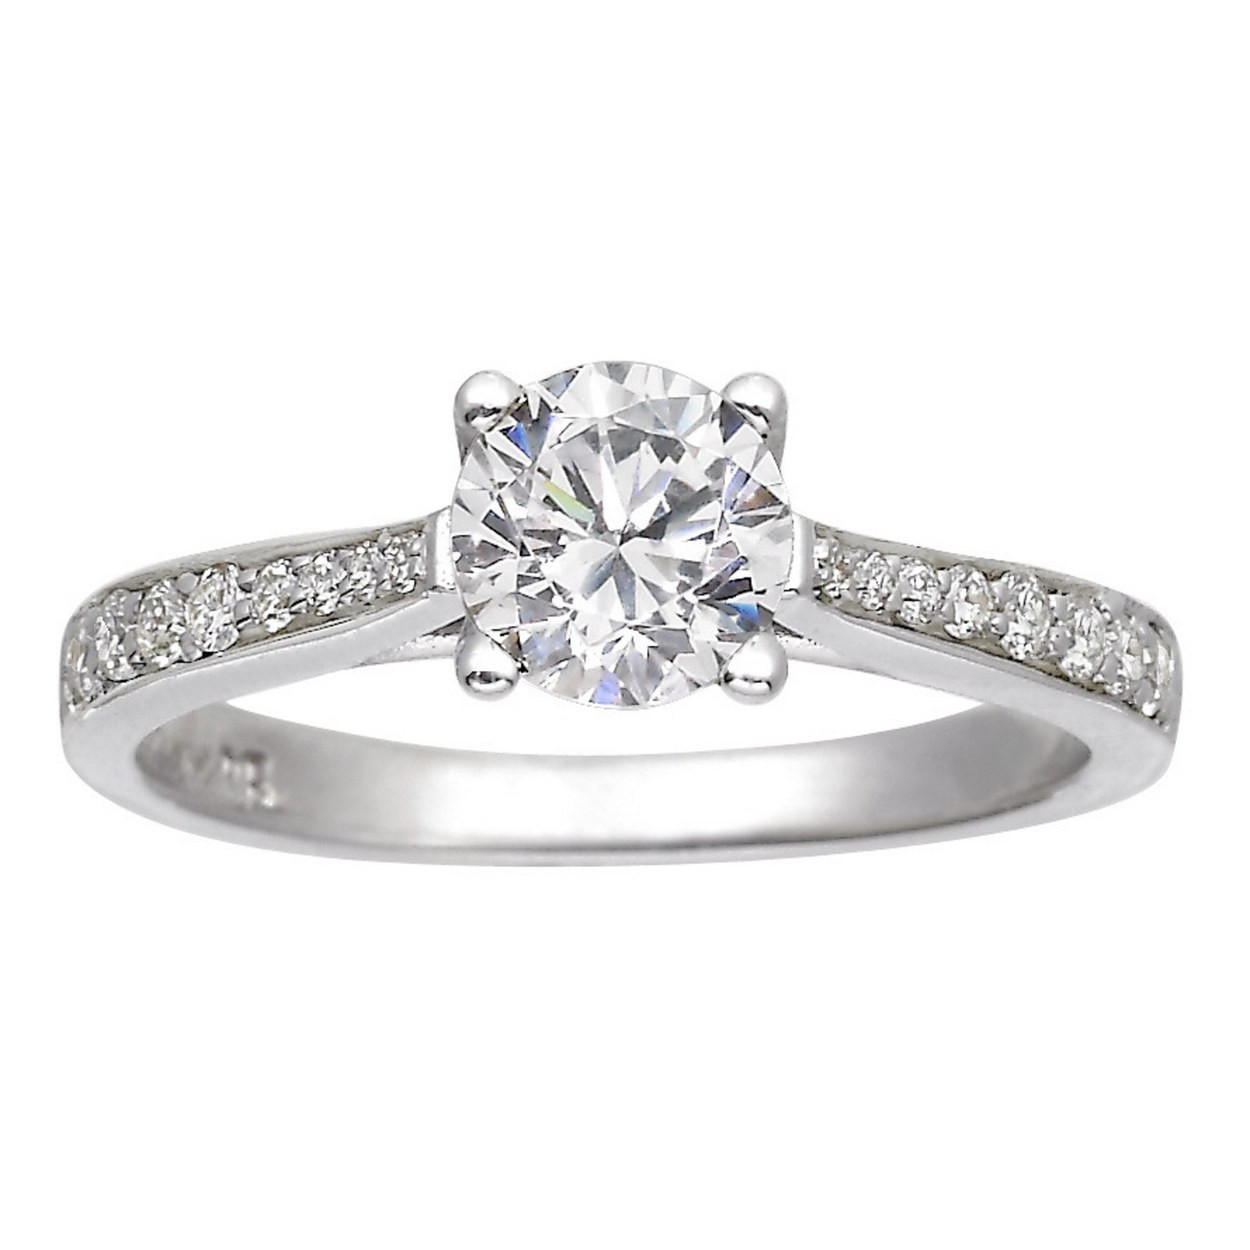 Cheap Diamond Wedding Bands For Women
 View Full Gallery of Elegant Diamond Wedding Rings for